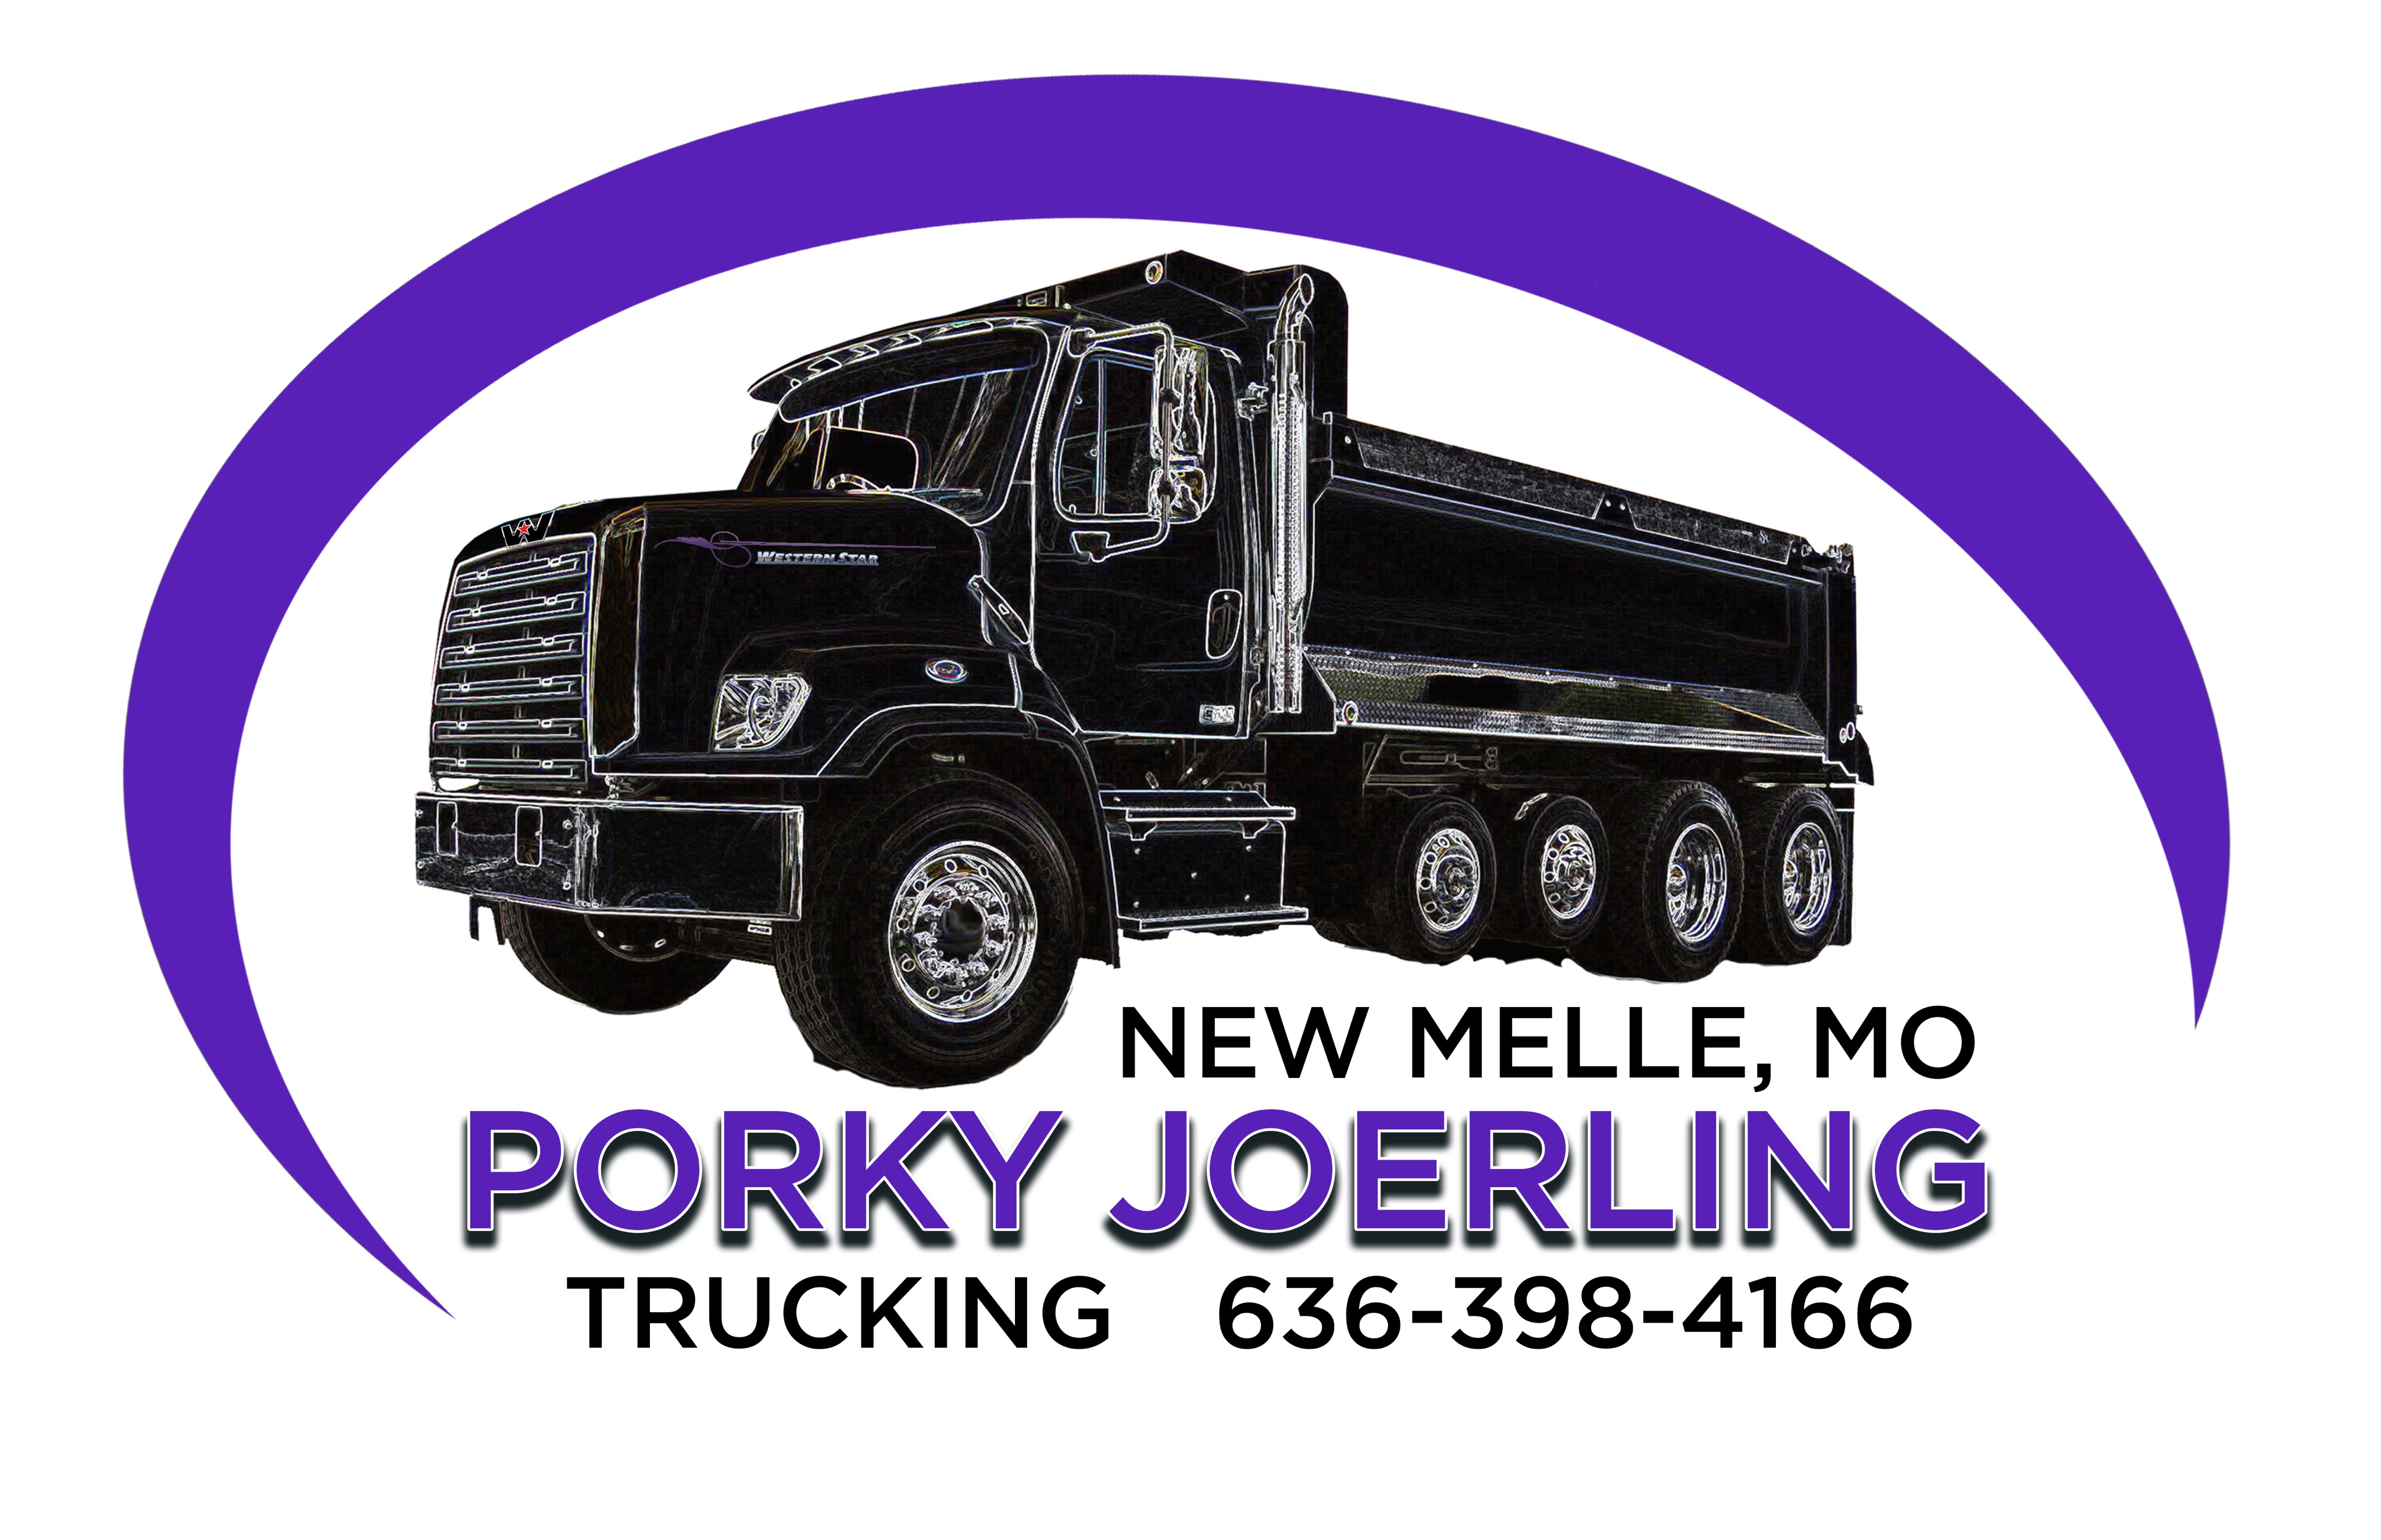 Porky Joerling Trucking